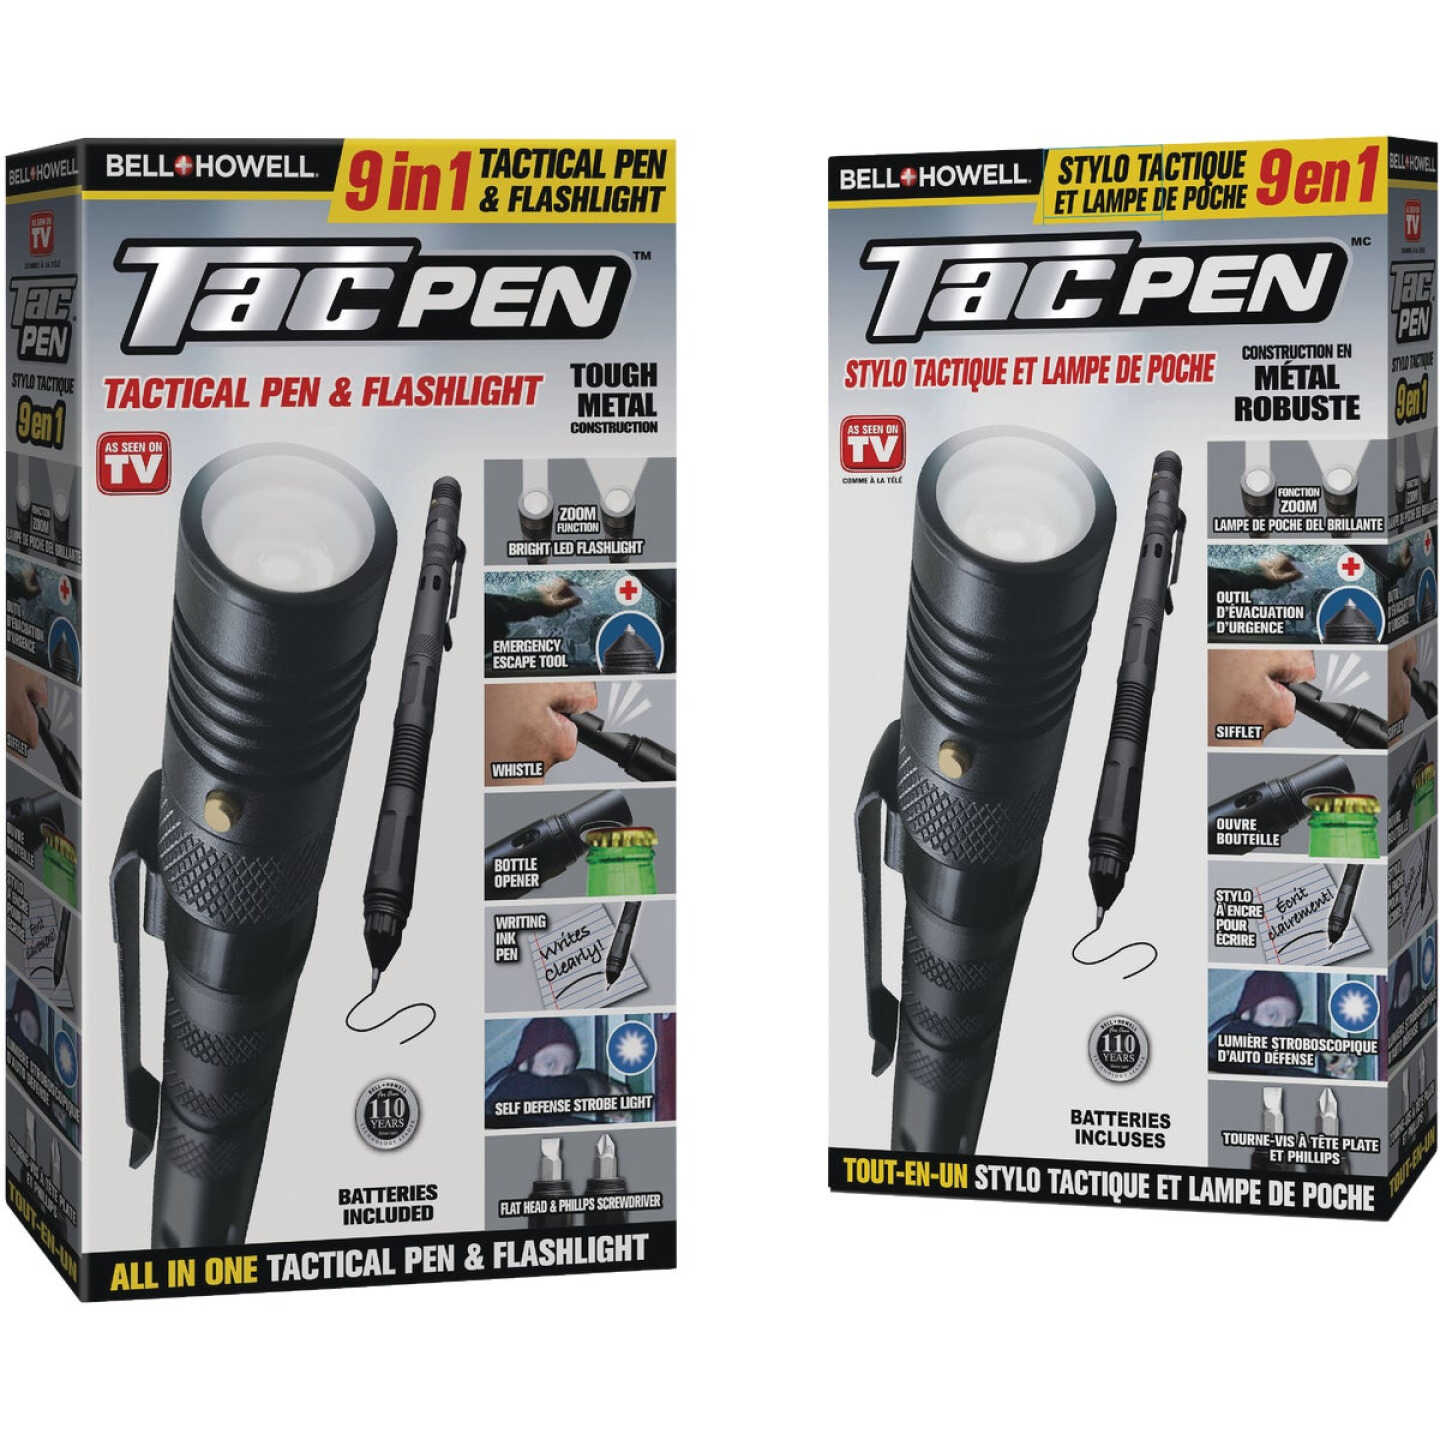 Bell+Howell TacPen Tactical Pen & Flashlight - Walker Brothers Hardware